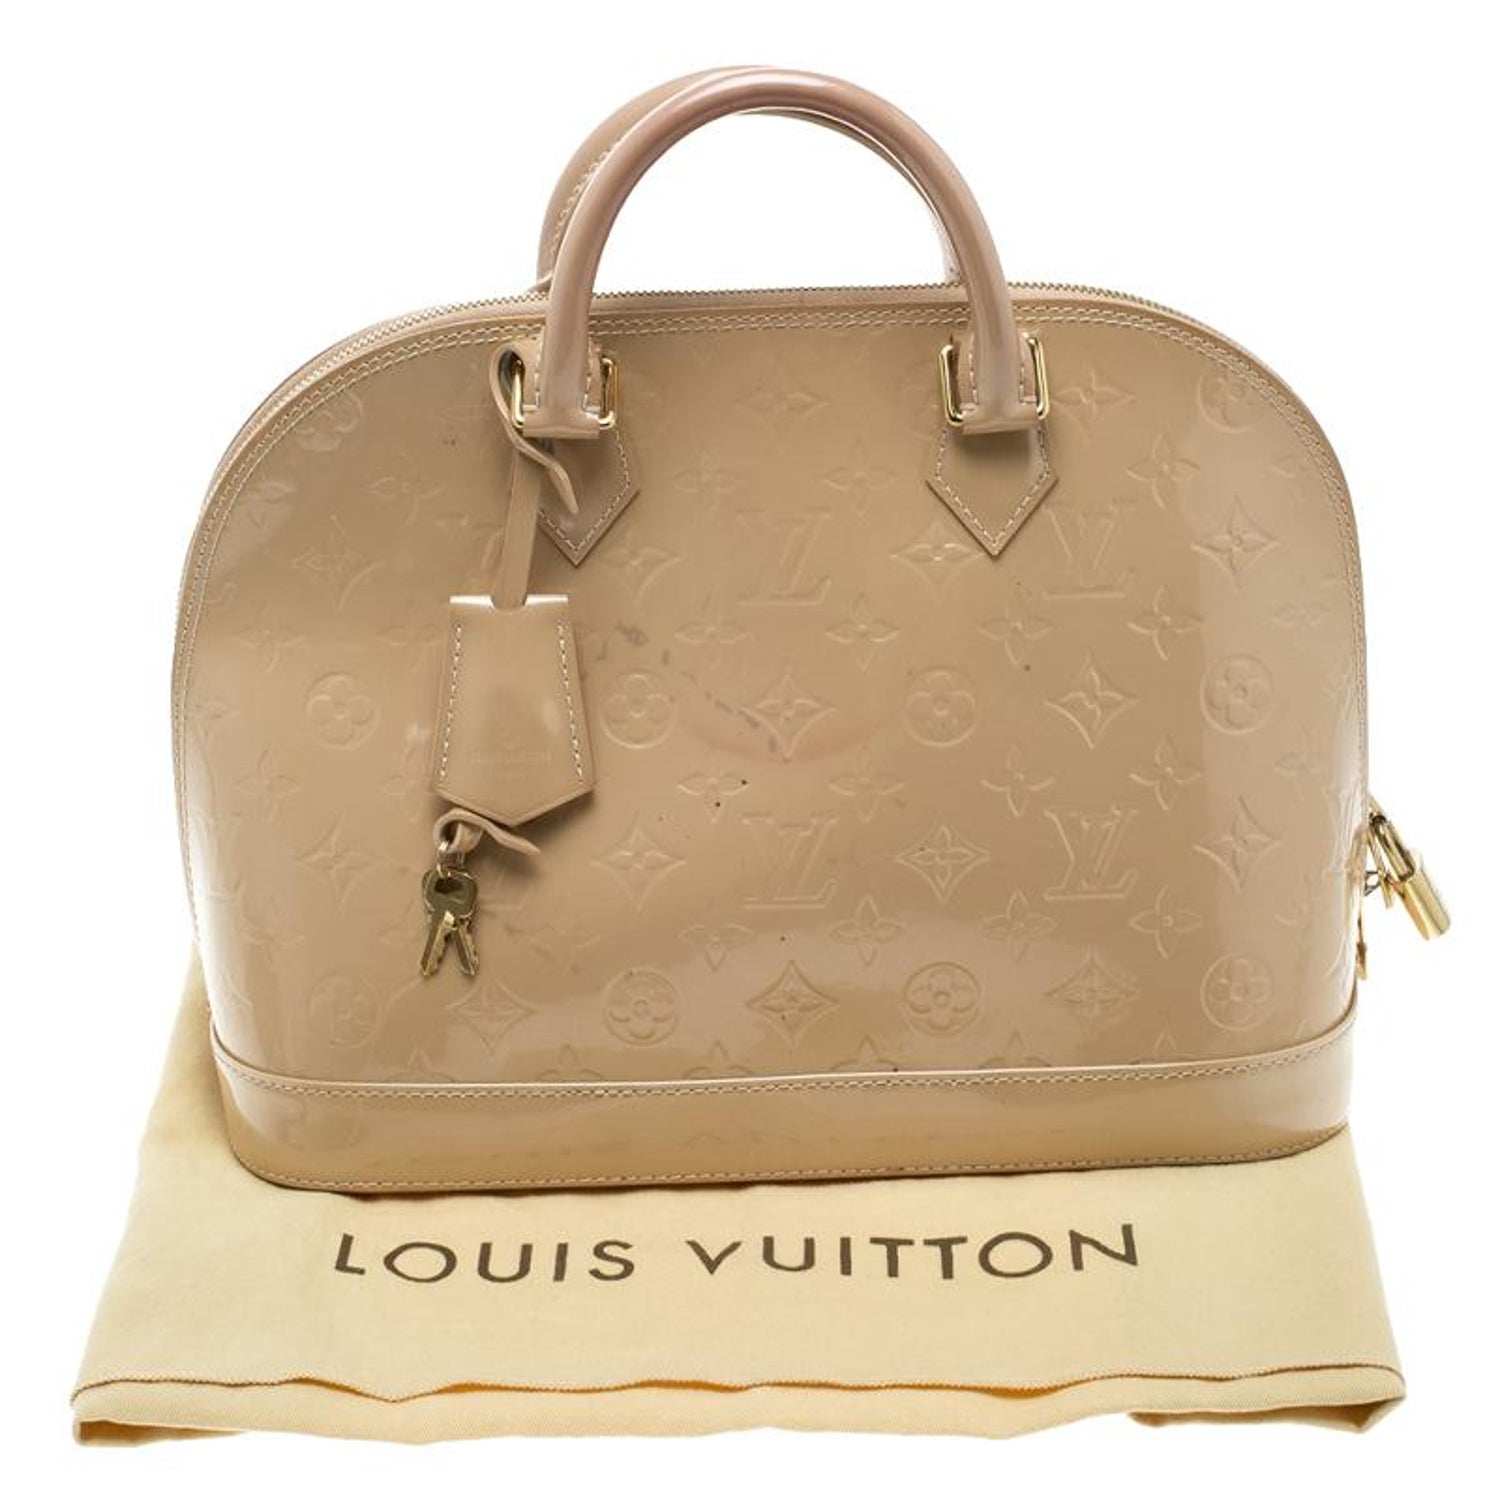 Louis Vuitton Beige Monogram Vernis Alma Pm Bag For Sale At 1stdibs